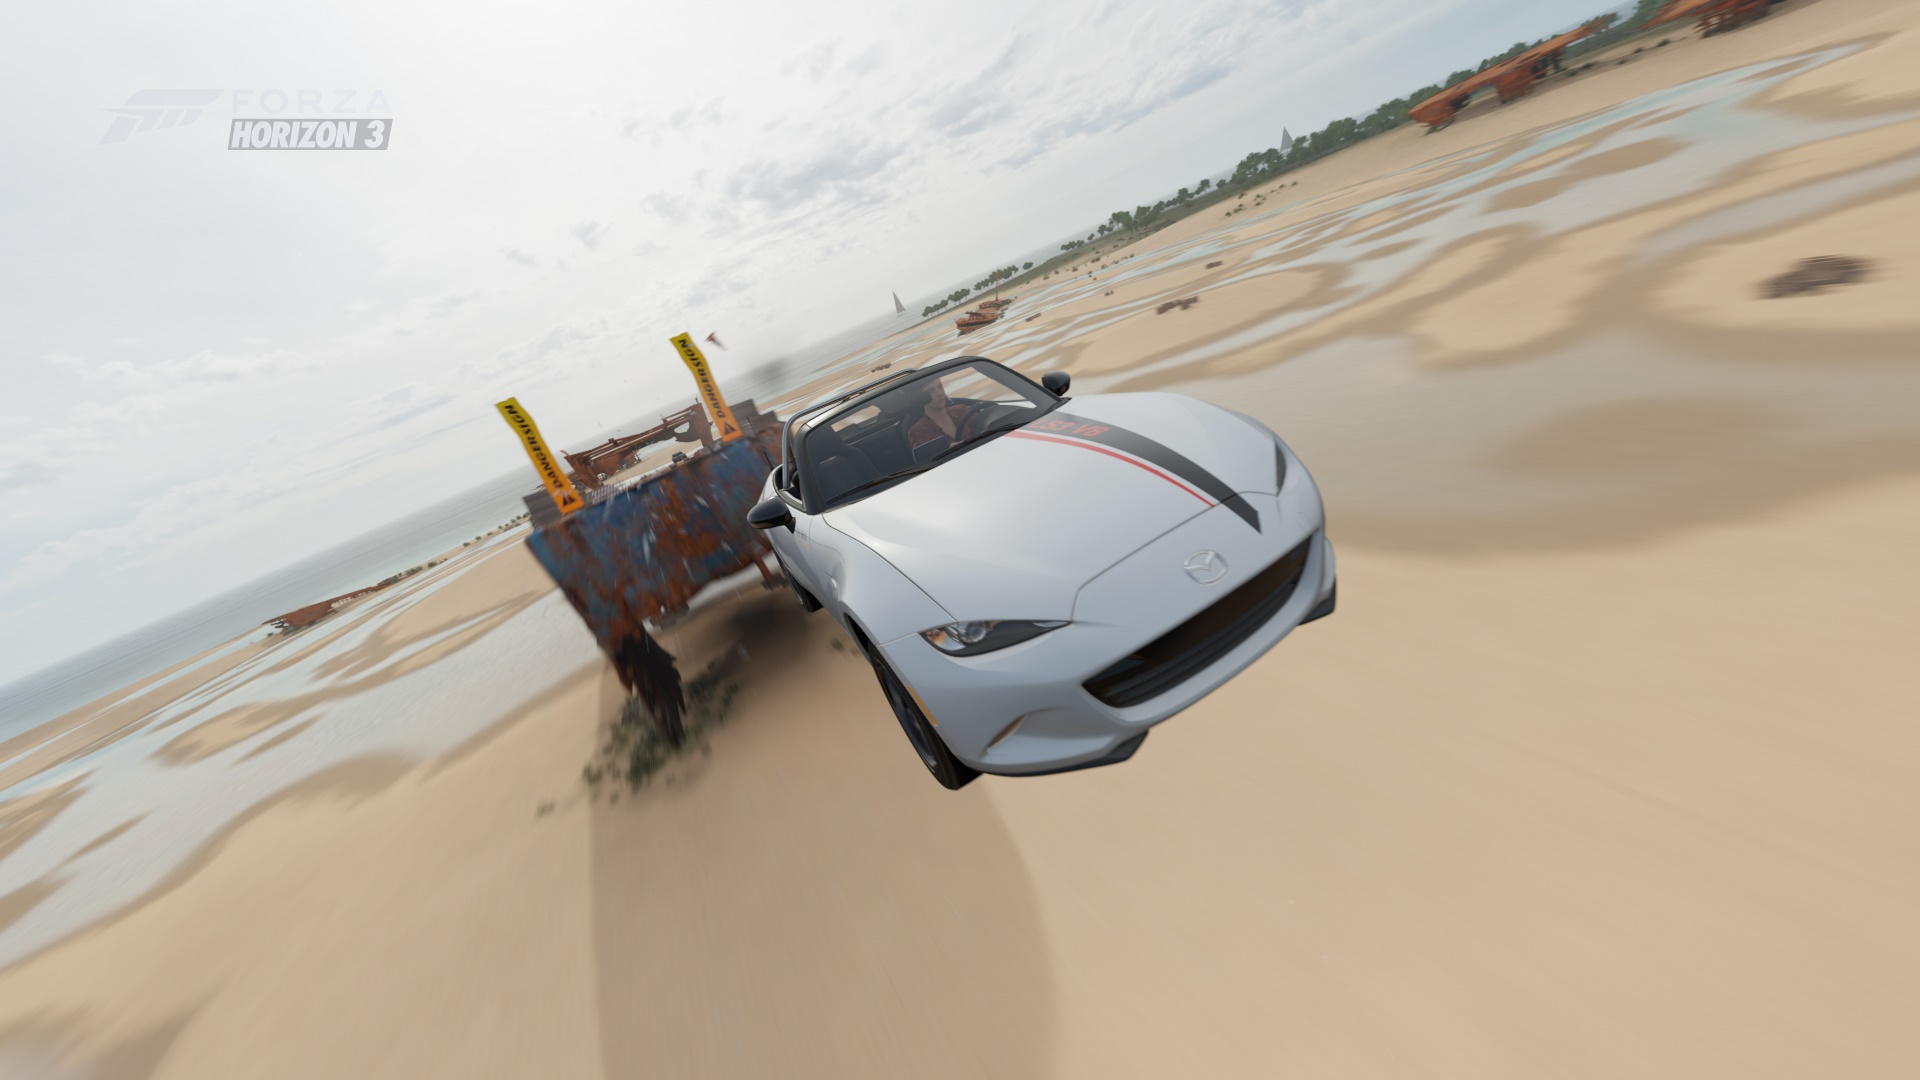 The Ultimate Virtual Driving Experience: 'Forza Horizon 3' - CorvetteForum